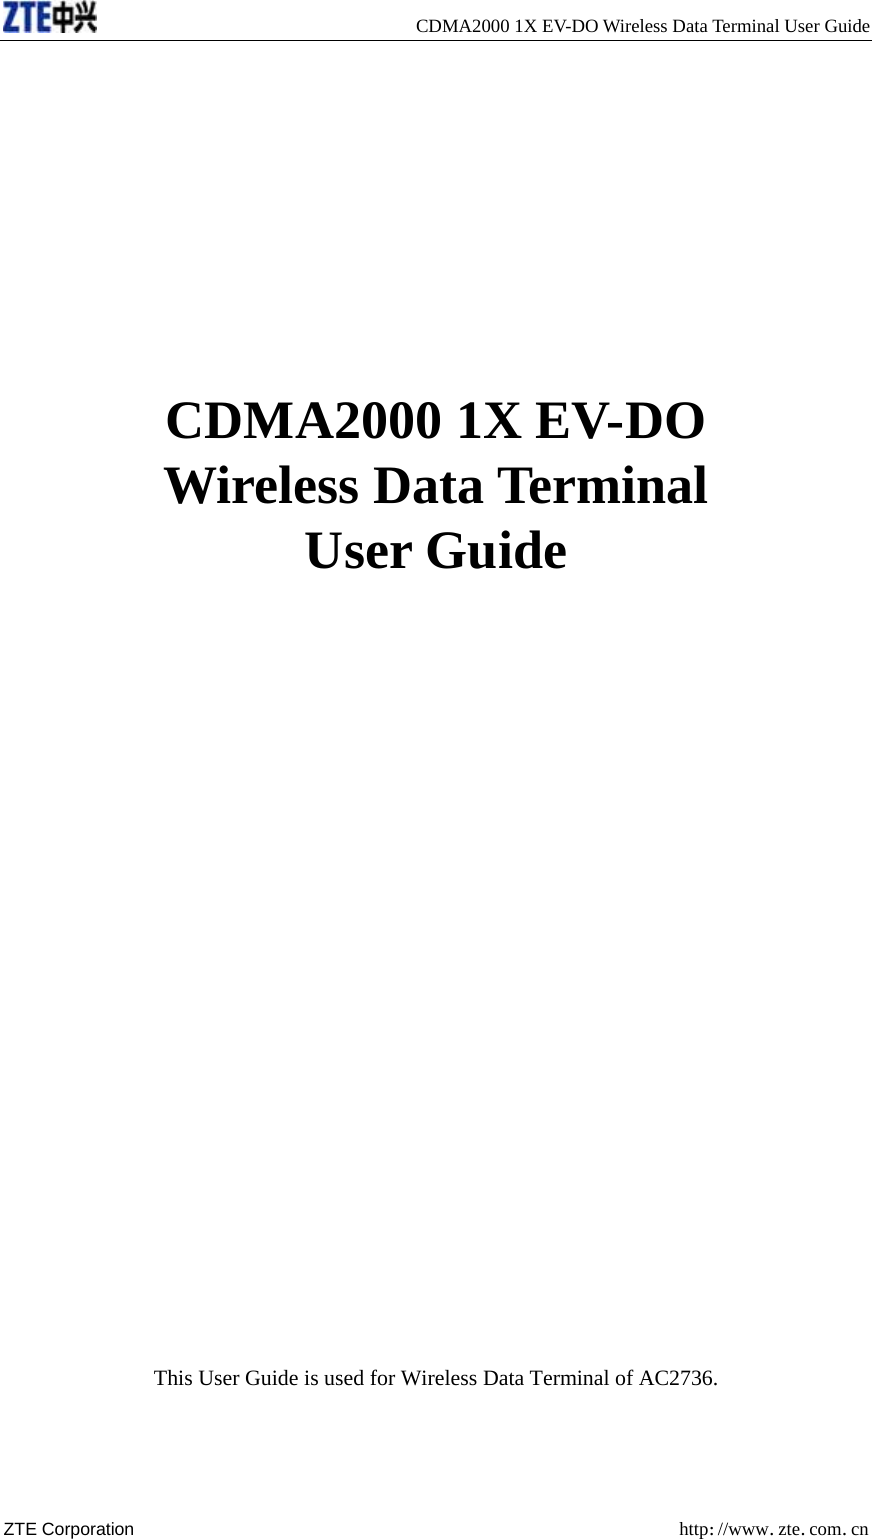   CDMA2000 1X EV-DO Wireless Data Terminal User Guide ZTE Corporation  http://www.zte.com.cn        CDMA2000 1X EV-DO Wireless Data Terminal User Guide                         This User Guide is used for Wireless Data Terminal of AC2736. 